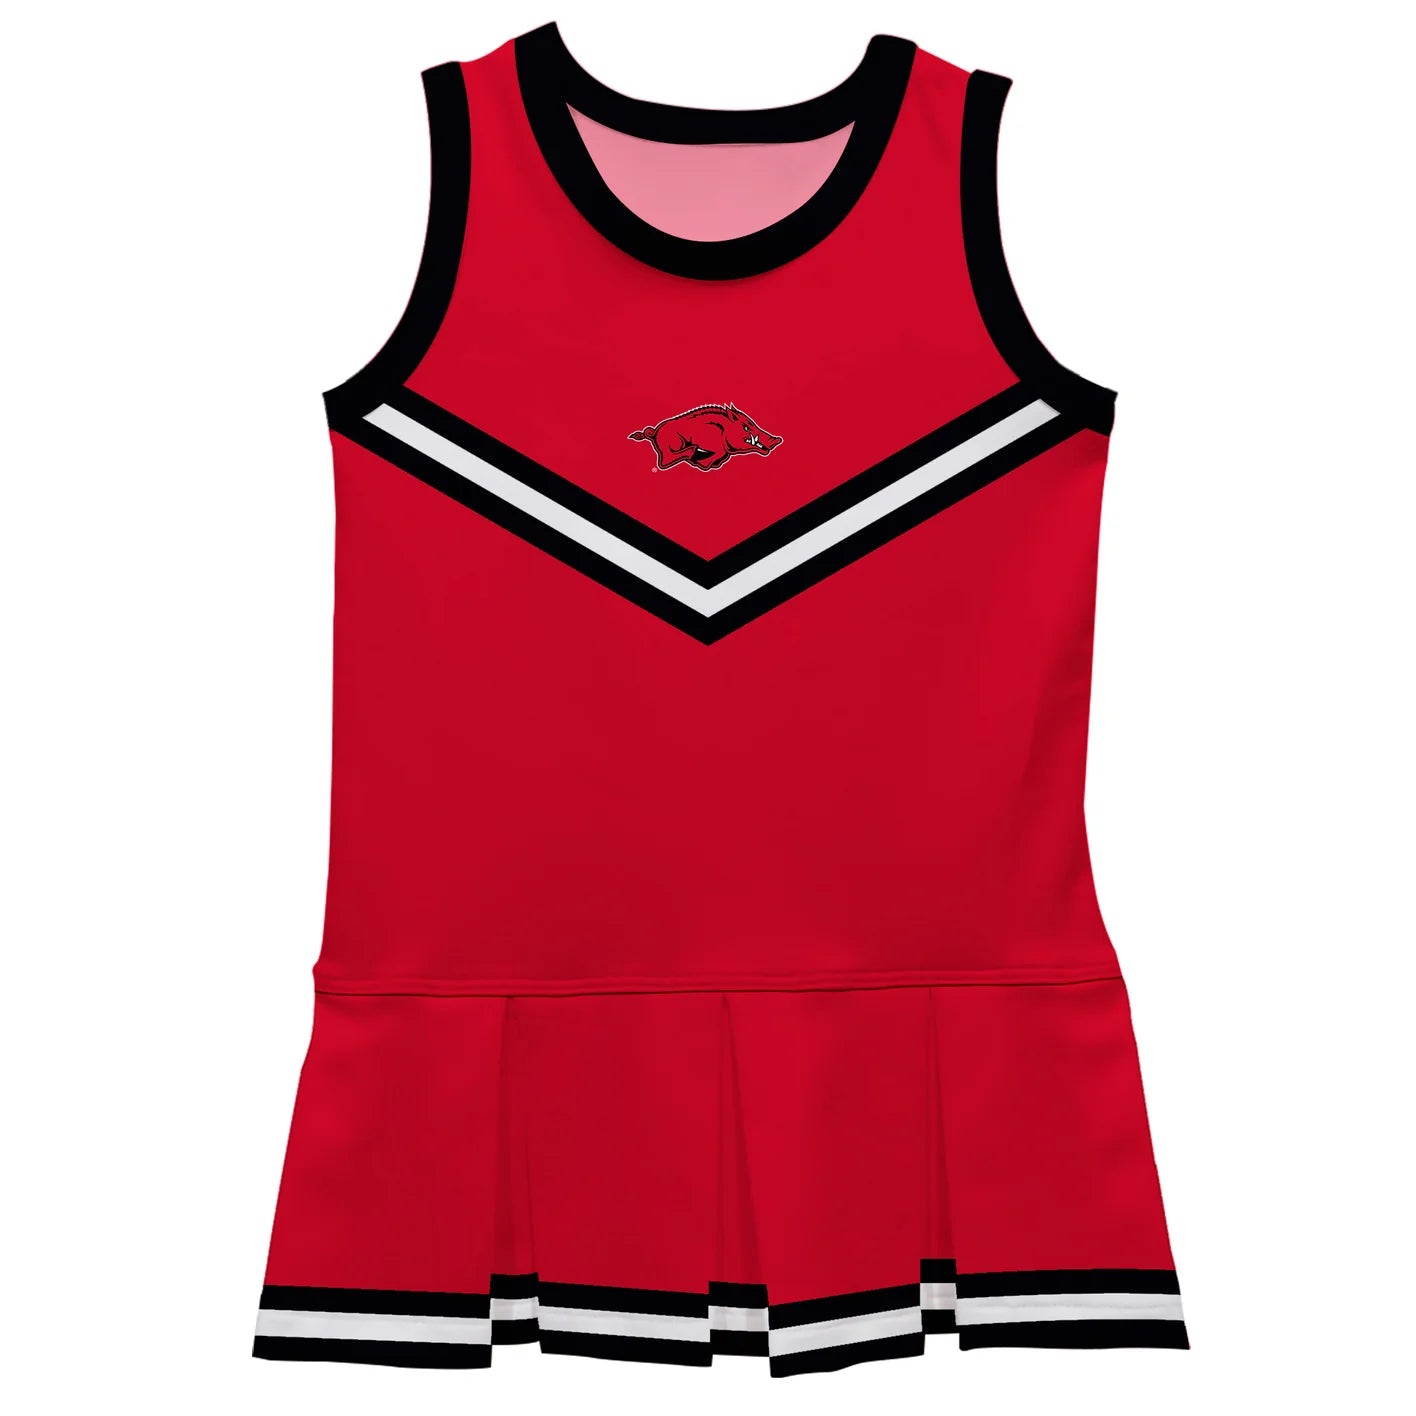 Arkansas Razorbacks Cheerleader Dress